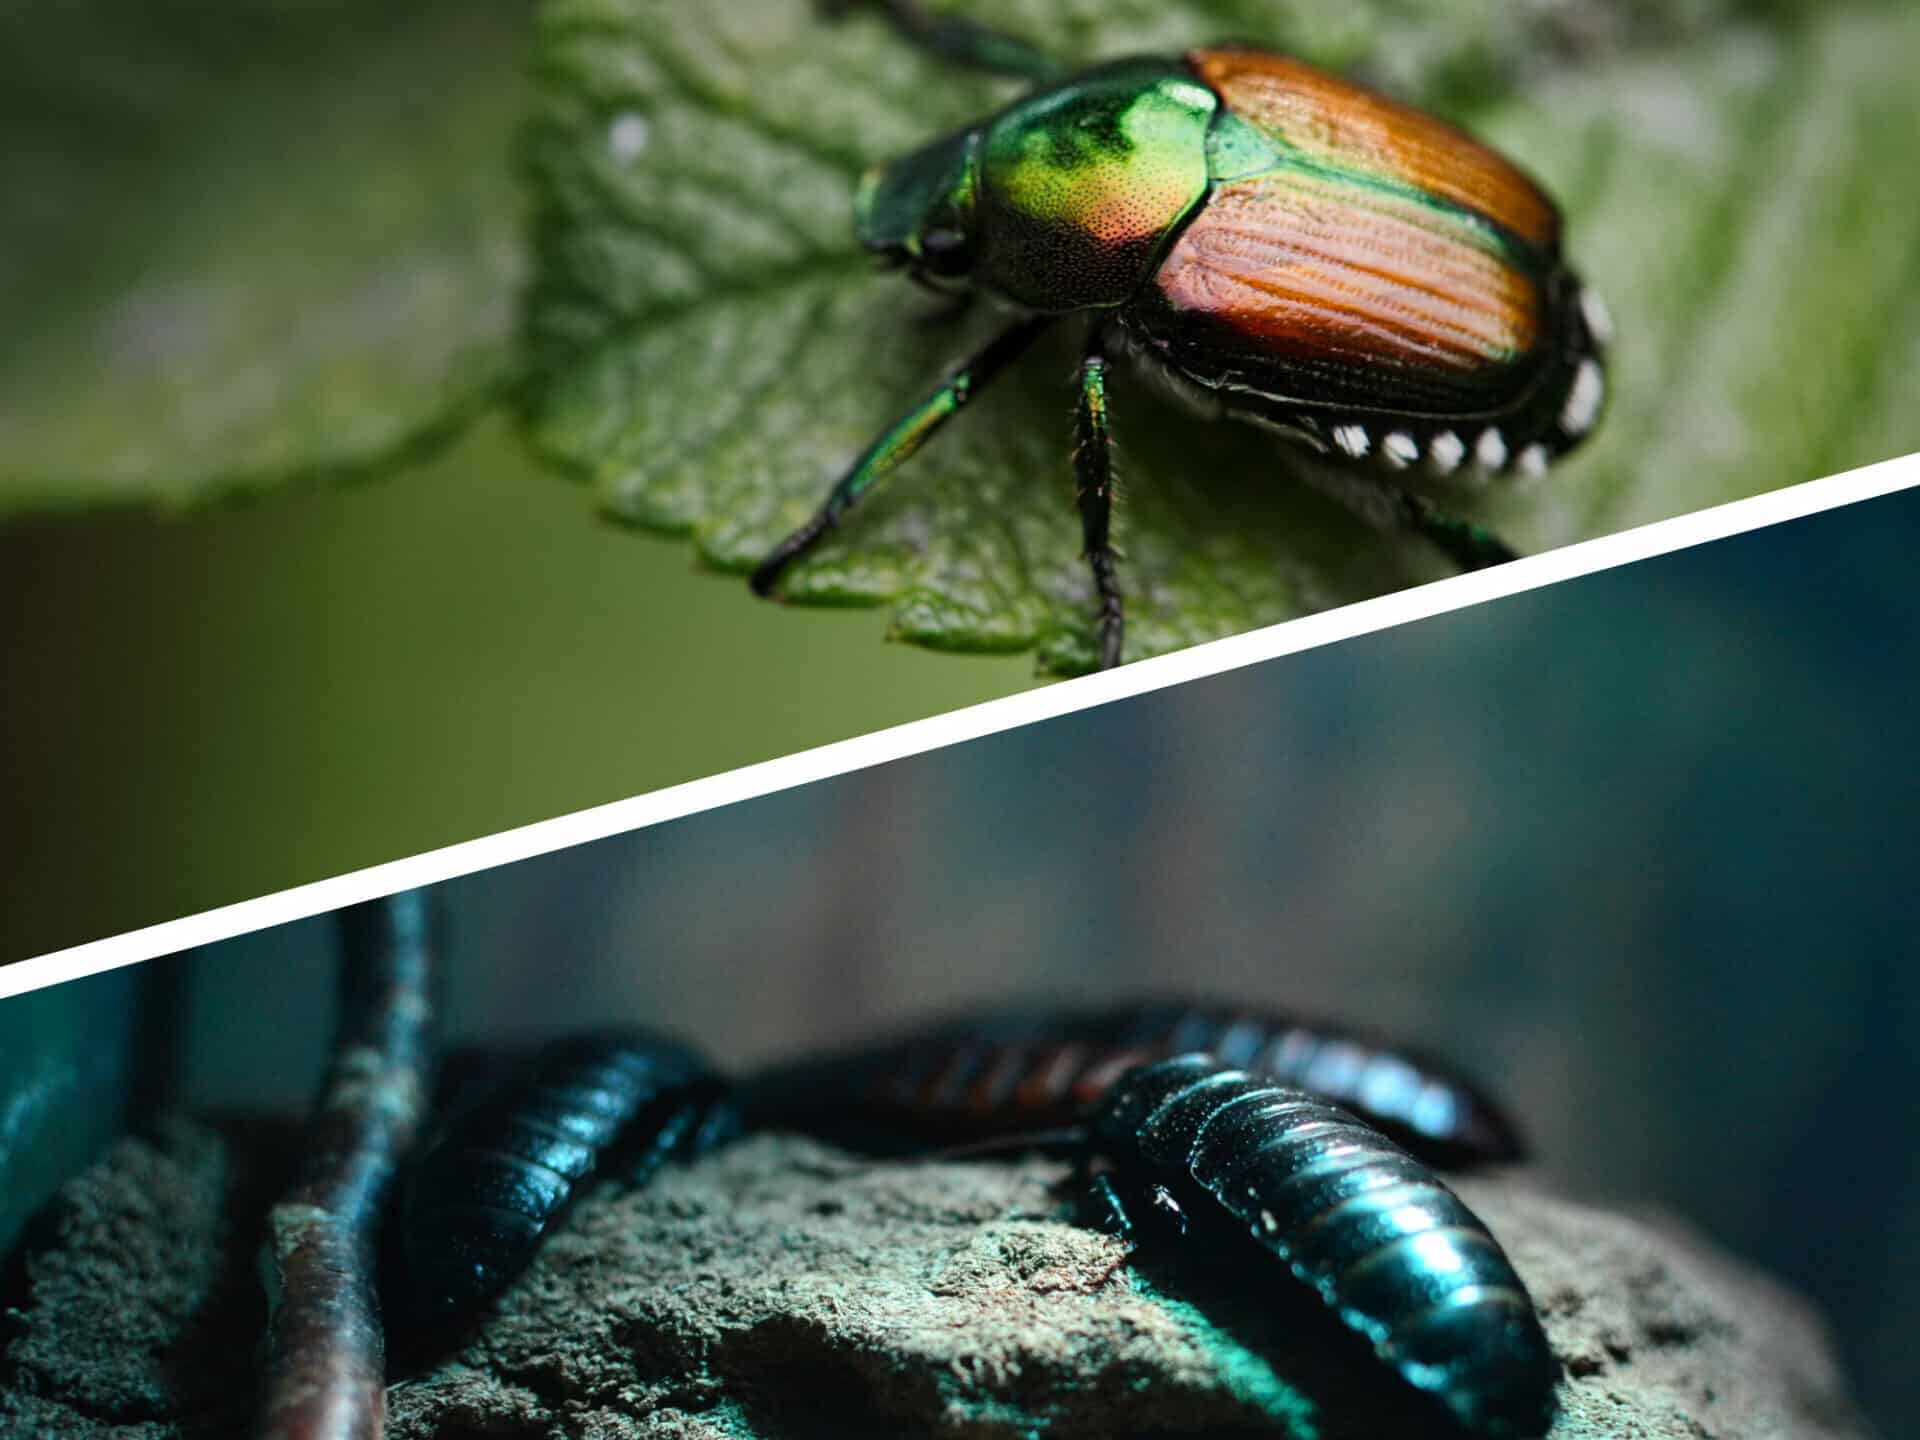 Habitats of Roaches and Beetls